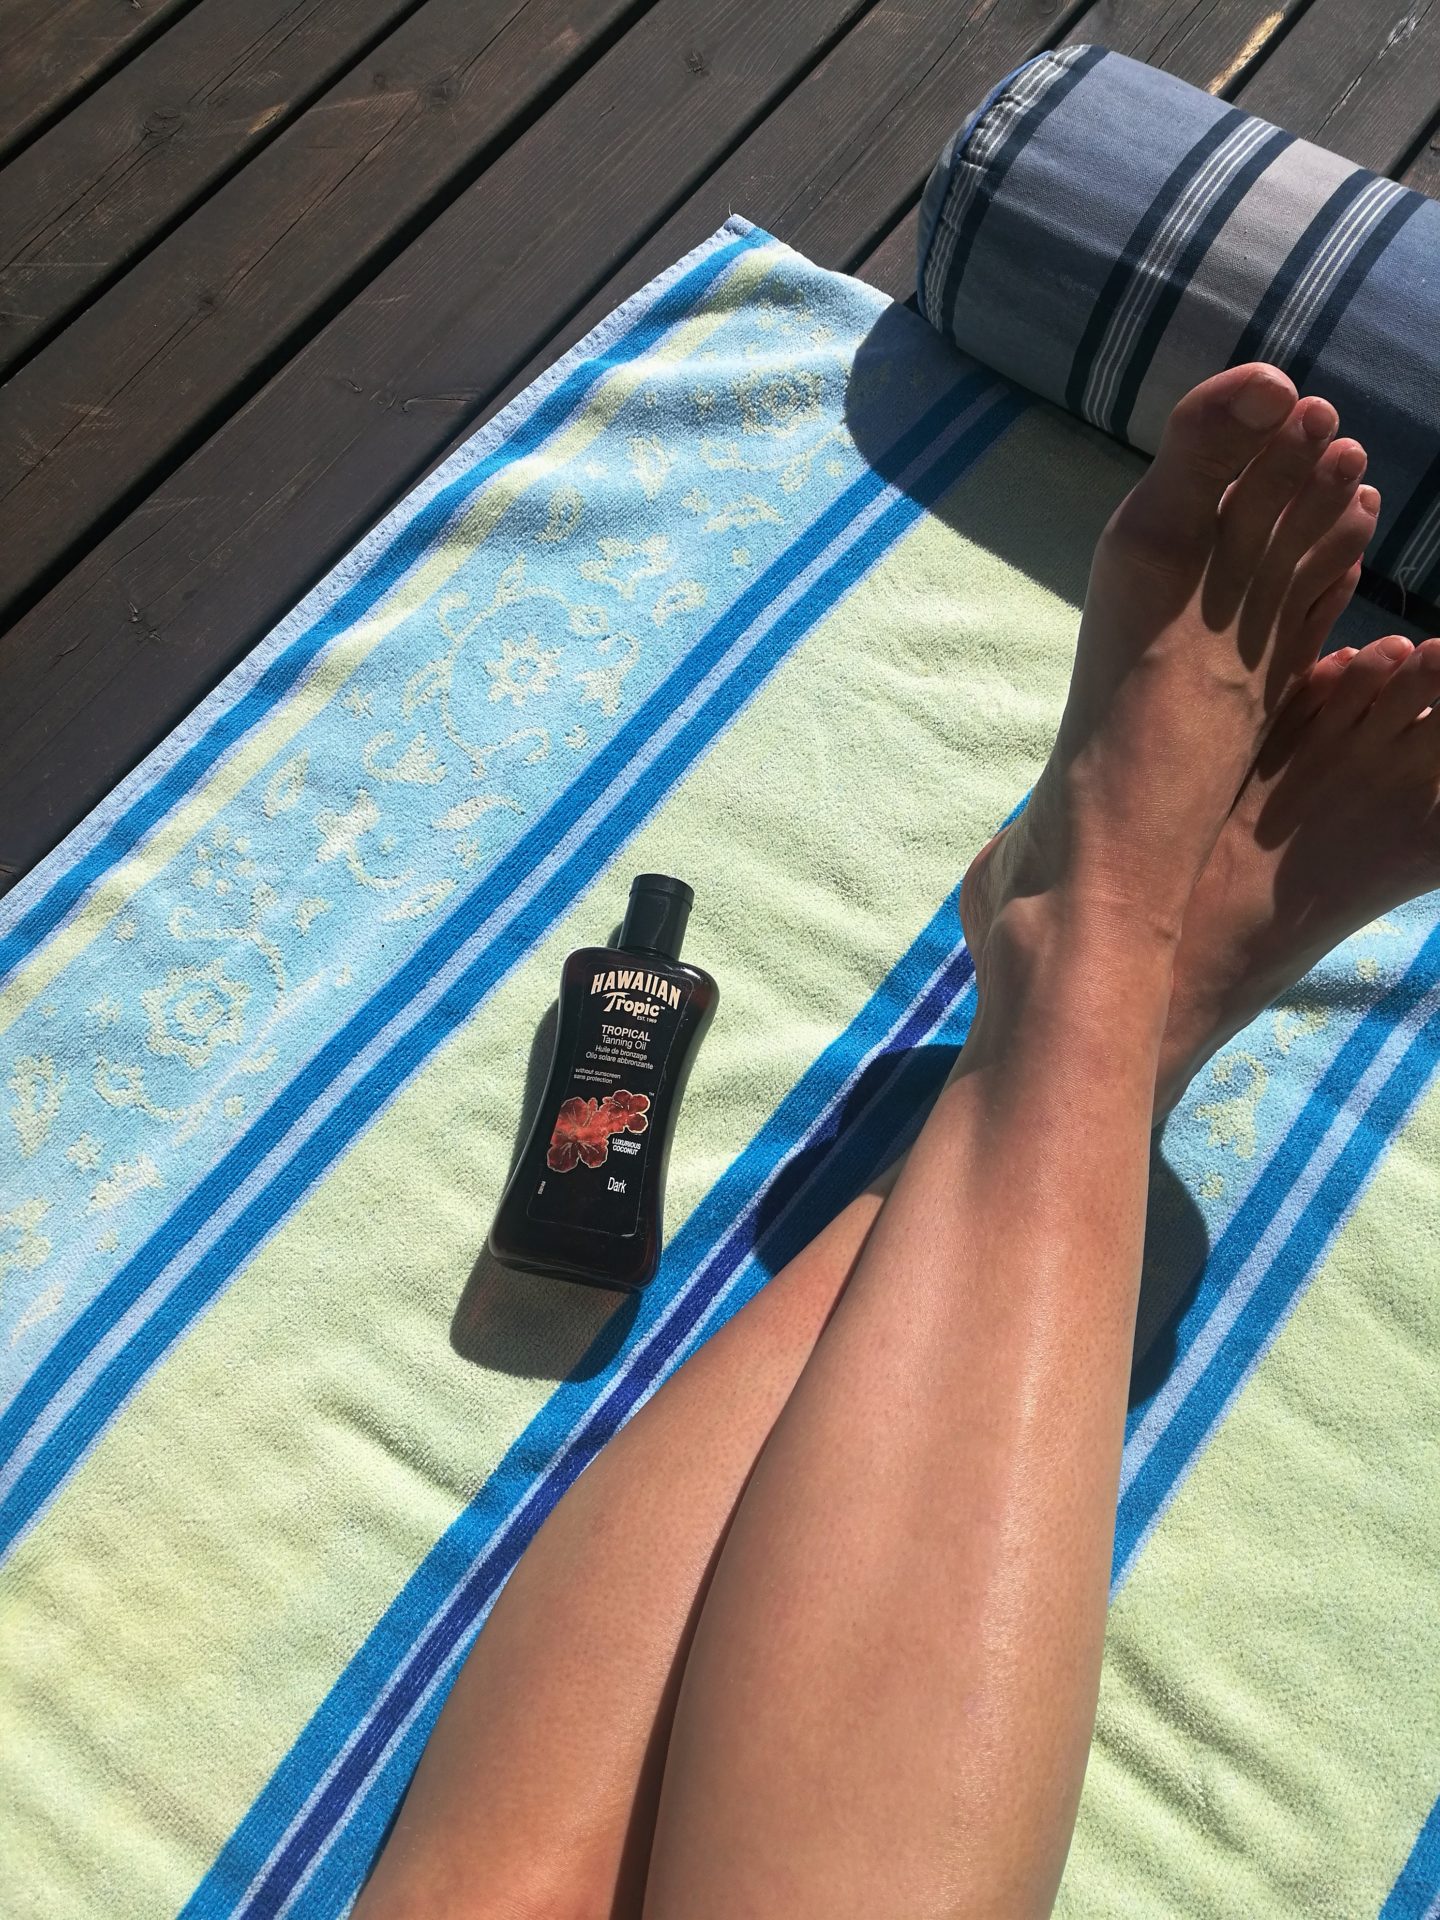 Finally warm Annimarian Colorful beach towel, tanned legs, Hawaiian tropic tanning oil